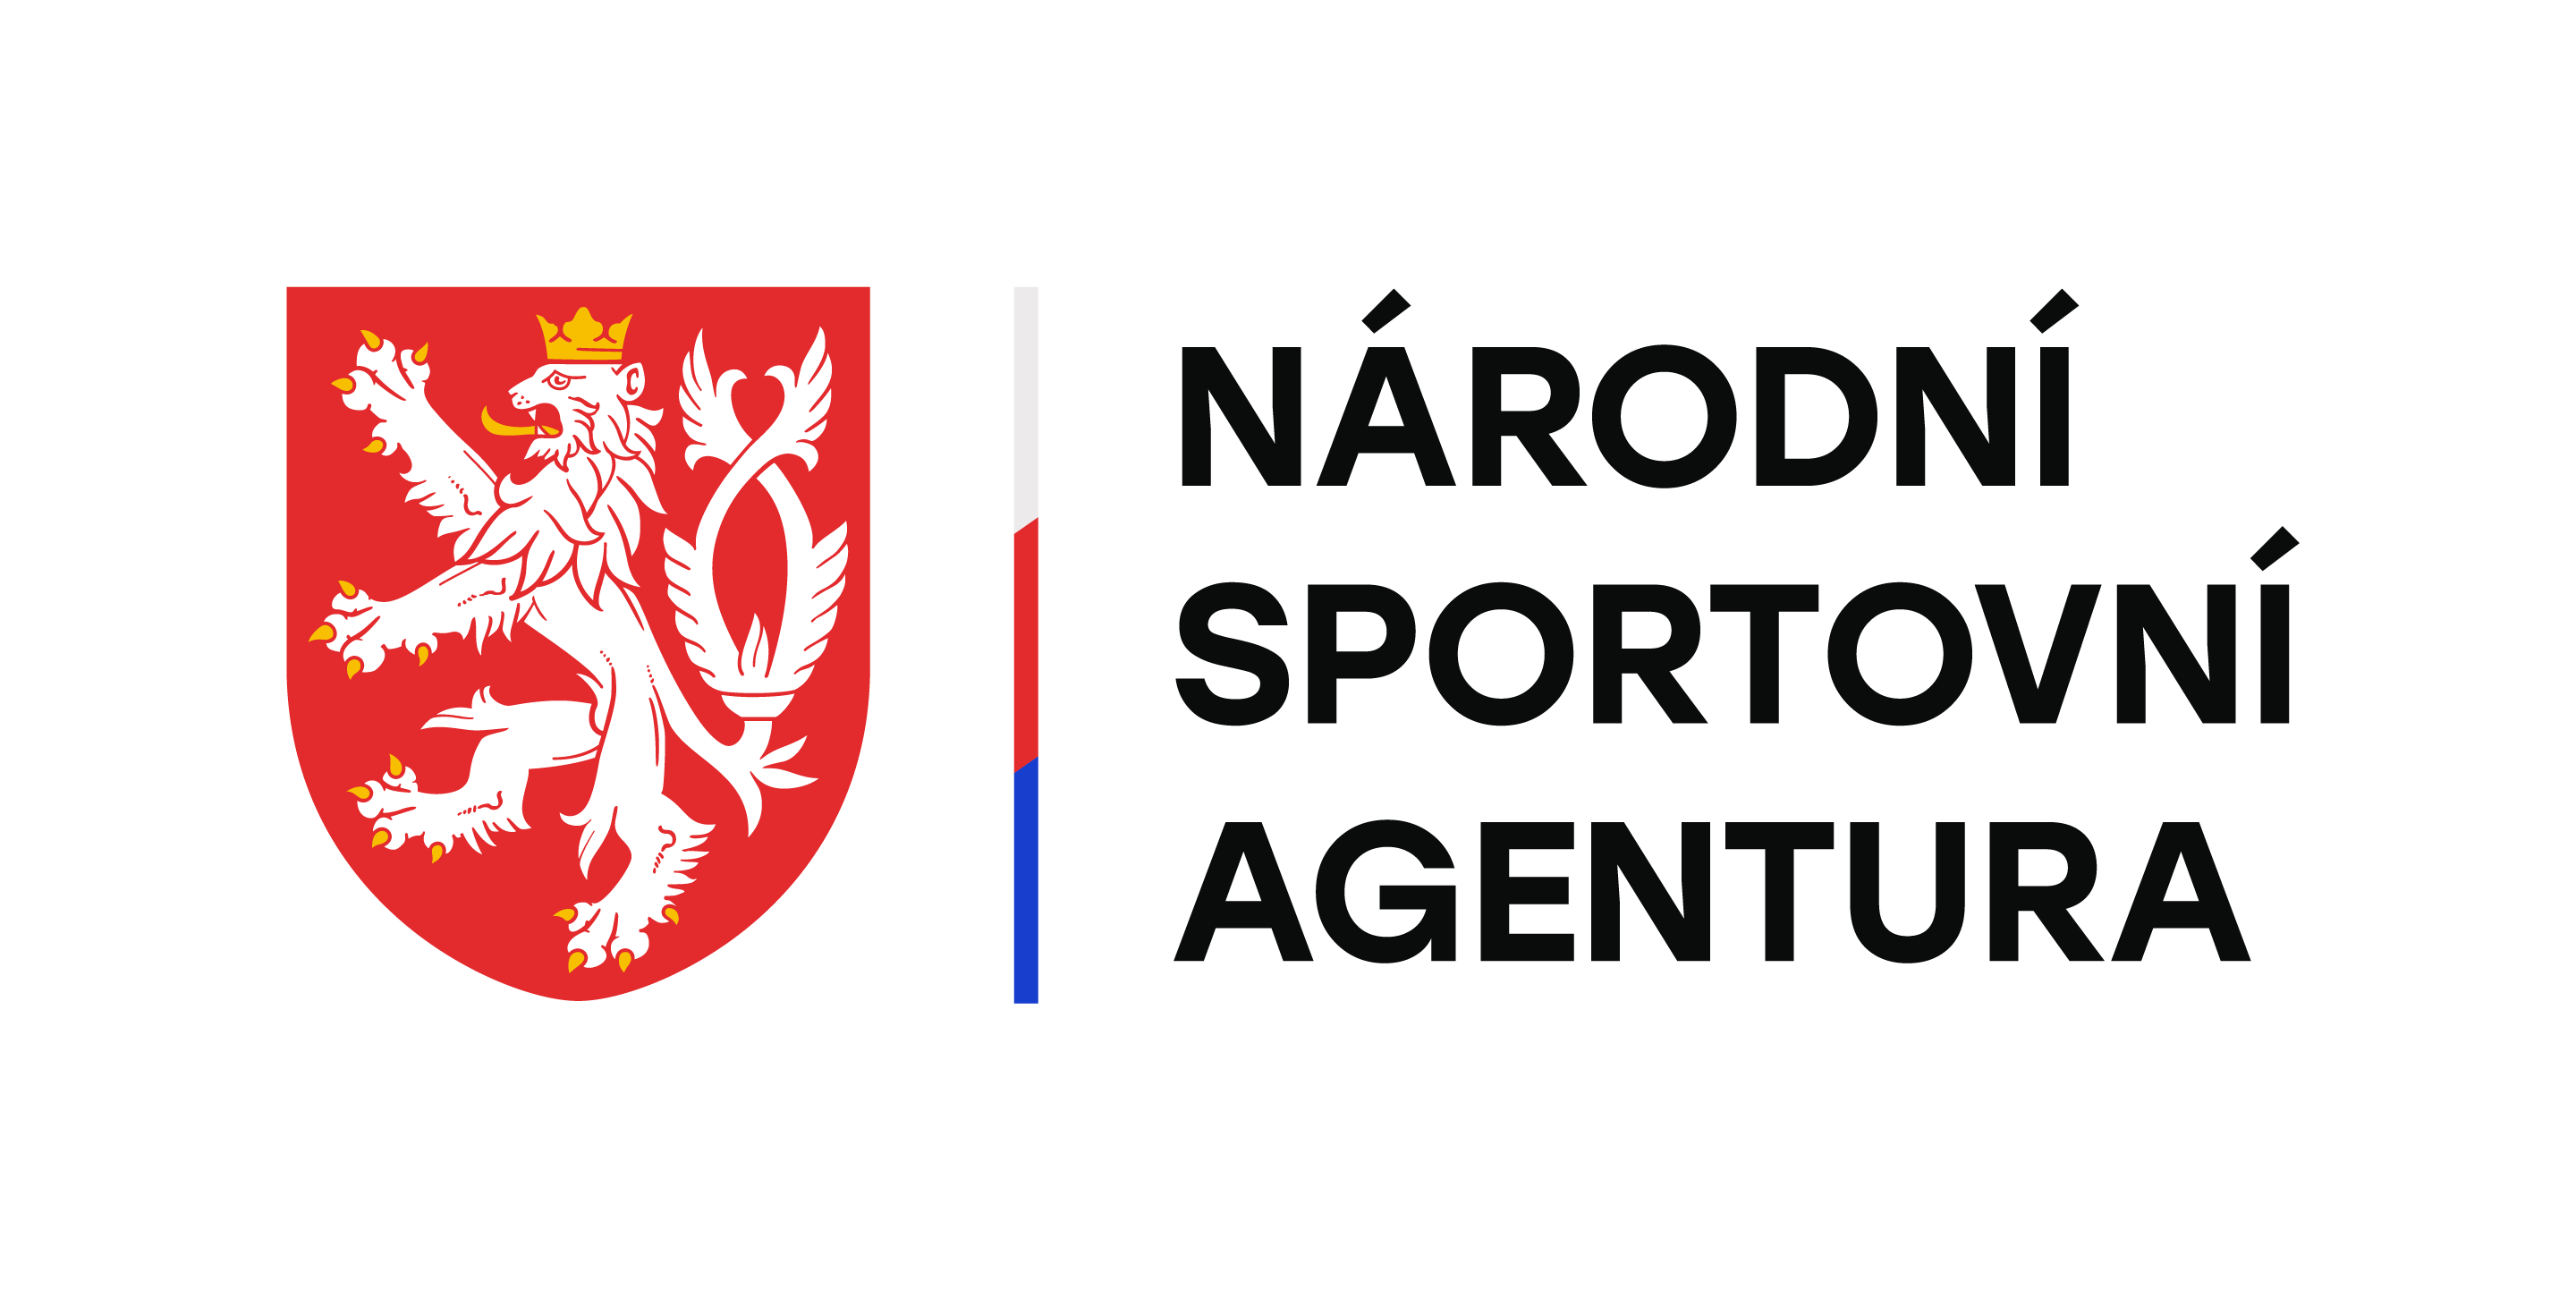 National Sport Agency logo